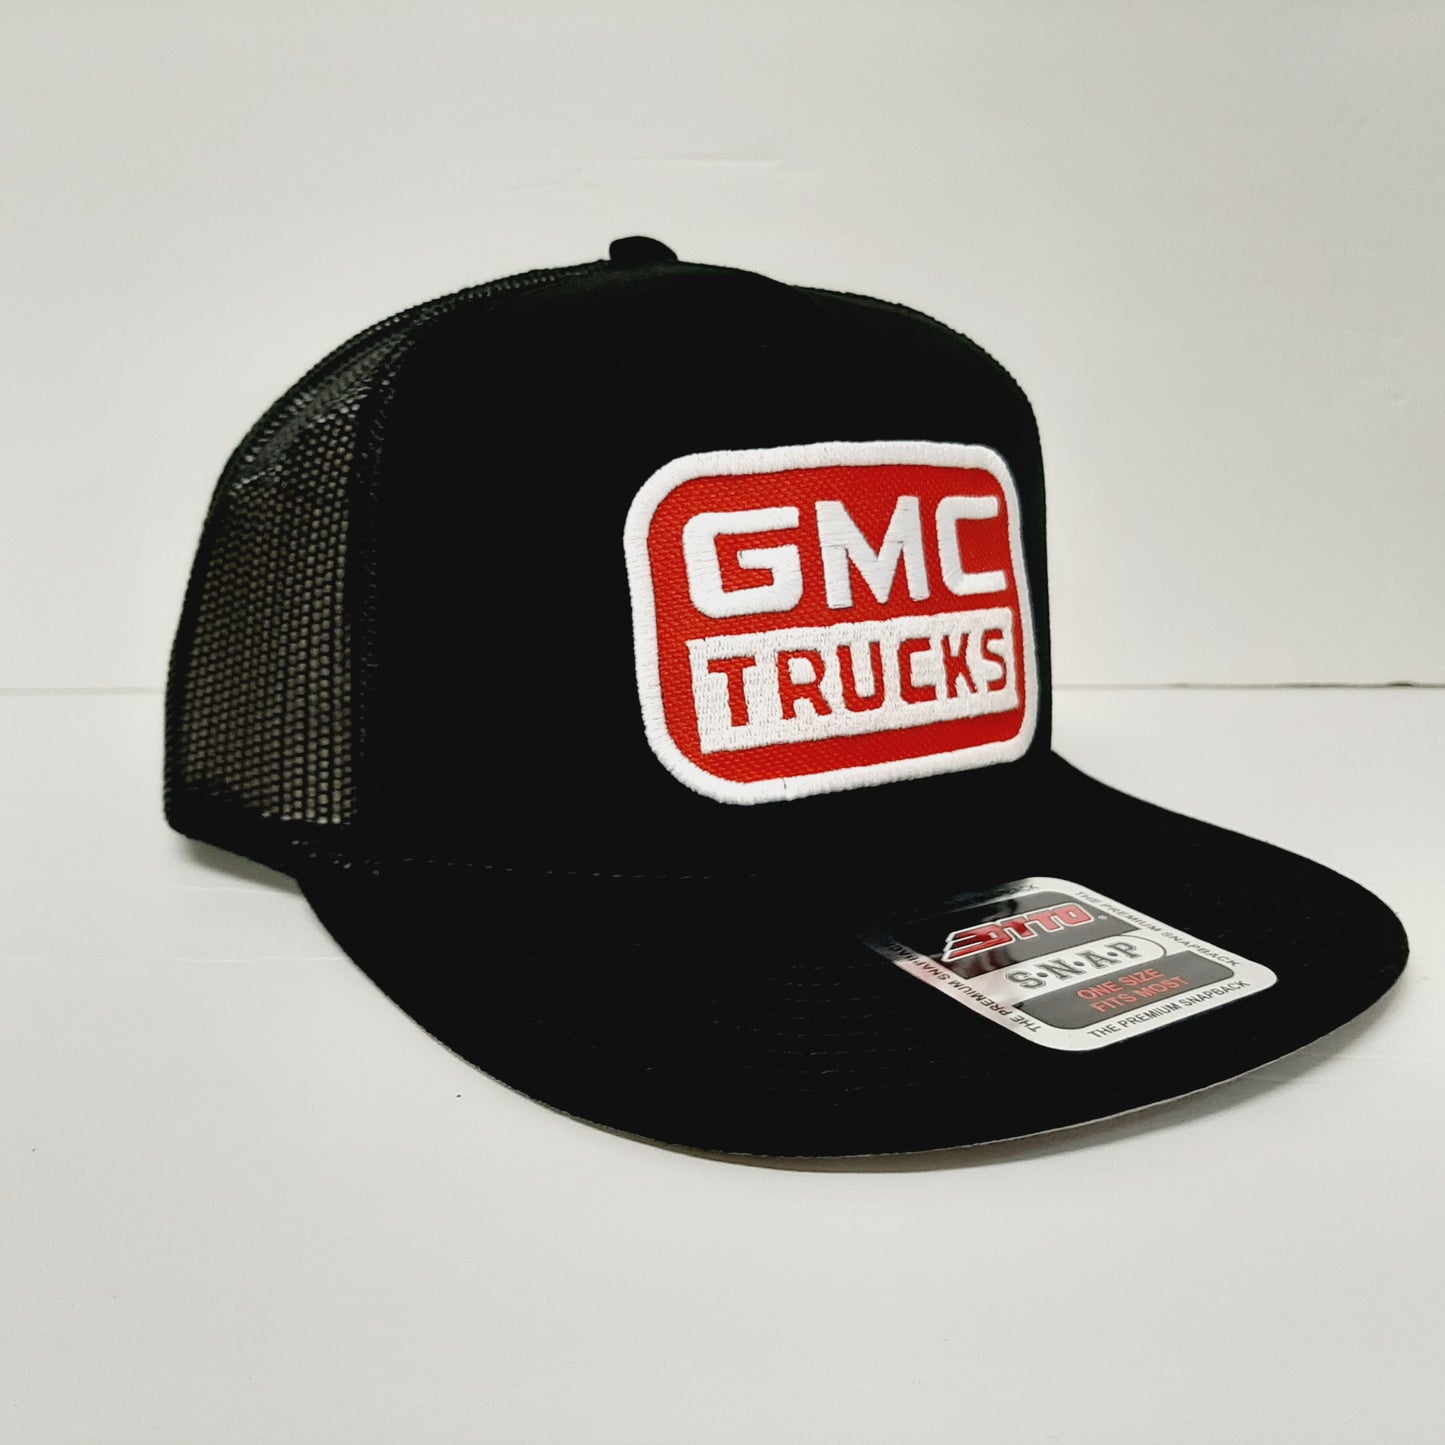 GMC Trucks Embroidered Patch Flat Bill Snapback Mesh Hat Cap OTTO Solid Black